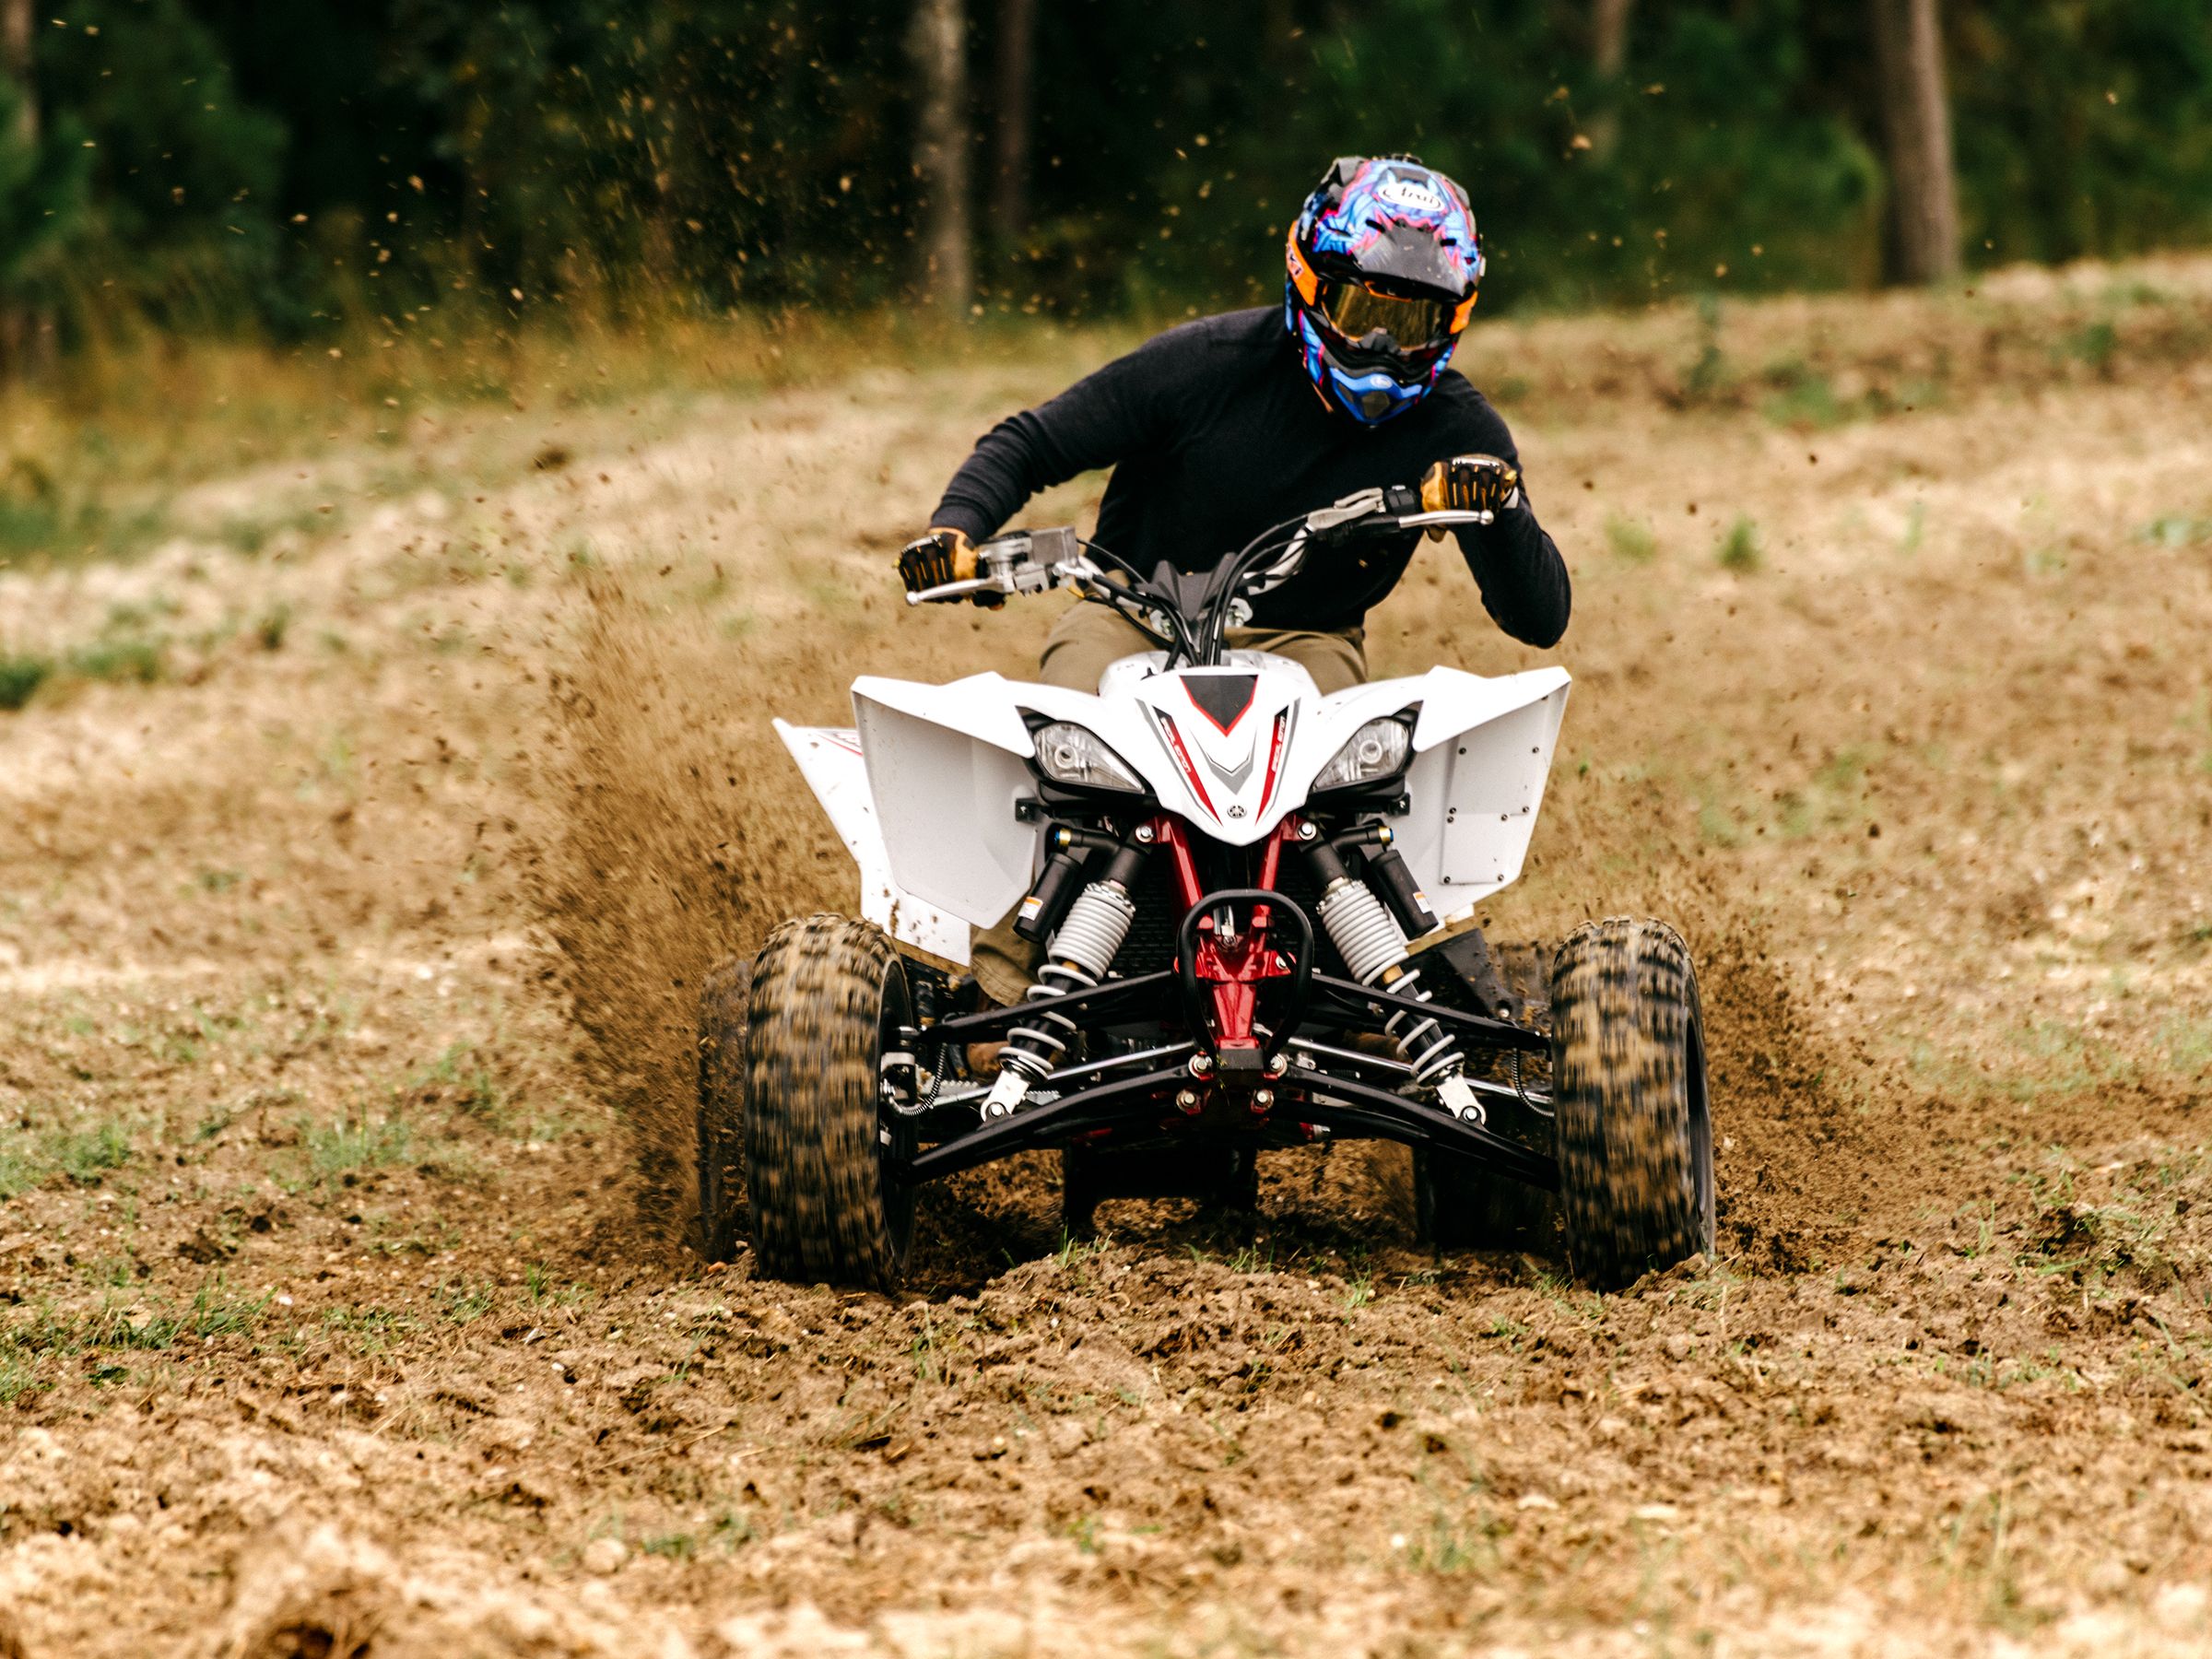 Fastest Four Wheeler ATV: Sport ATV Powering Through Mud on Dirt Track